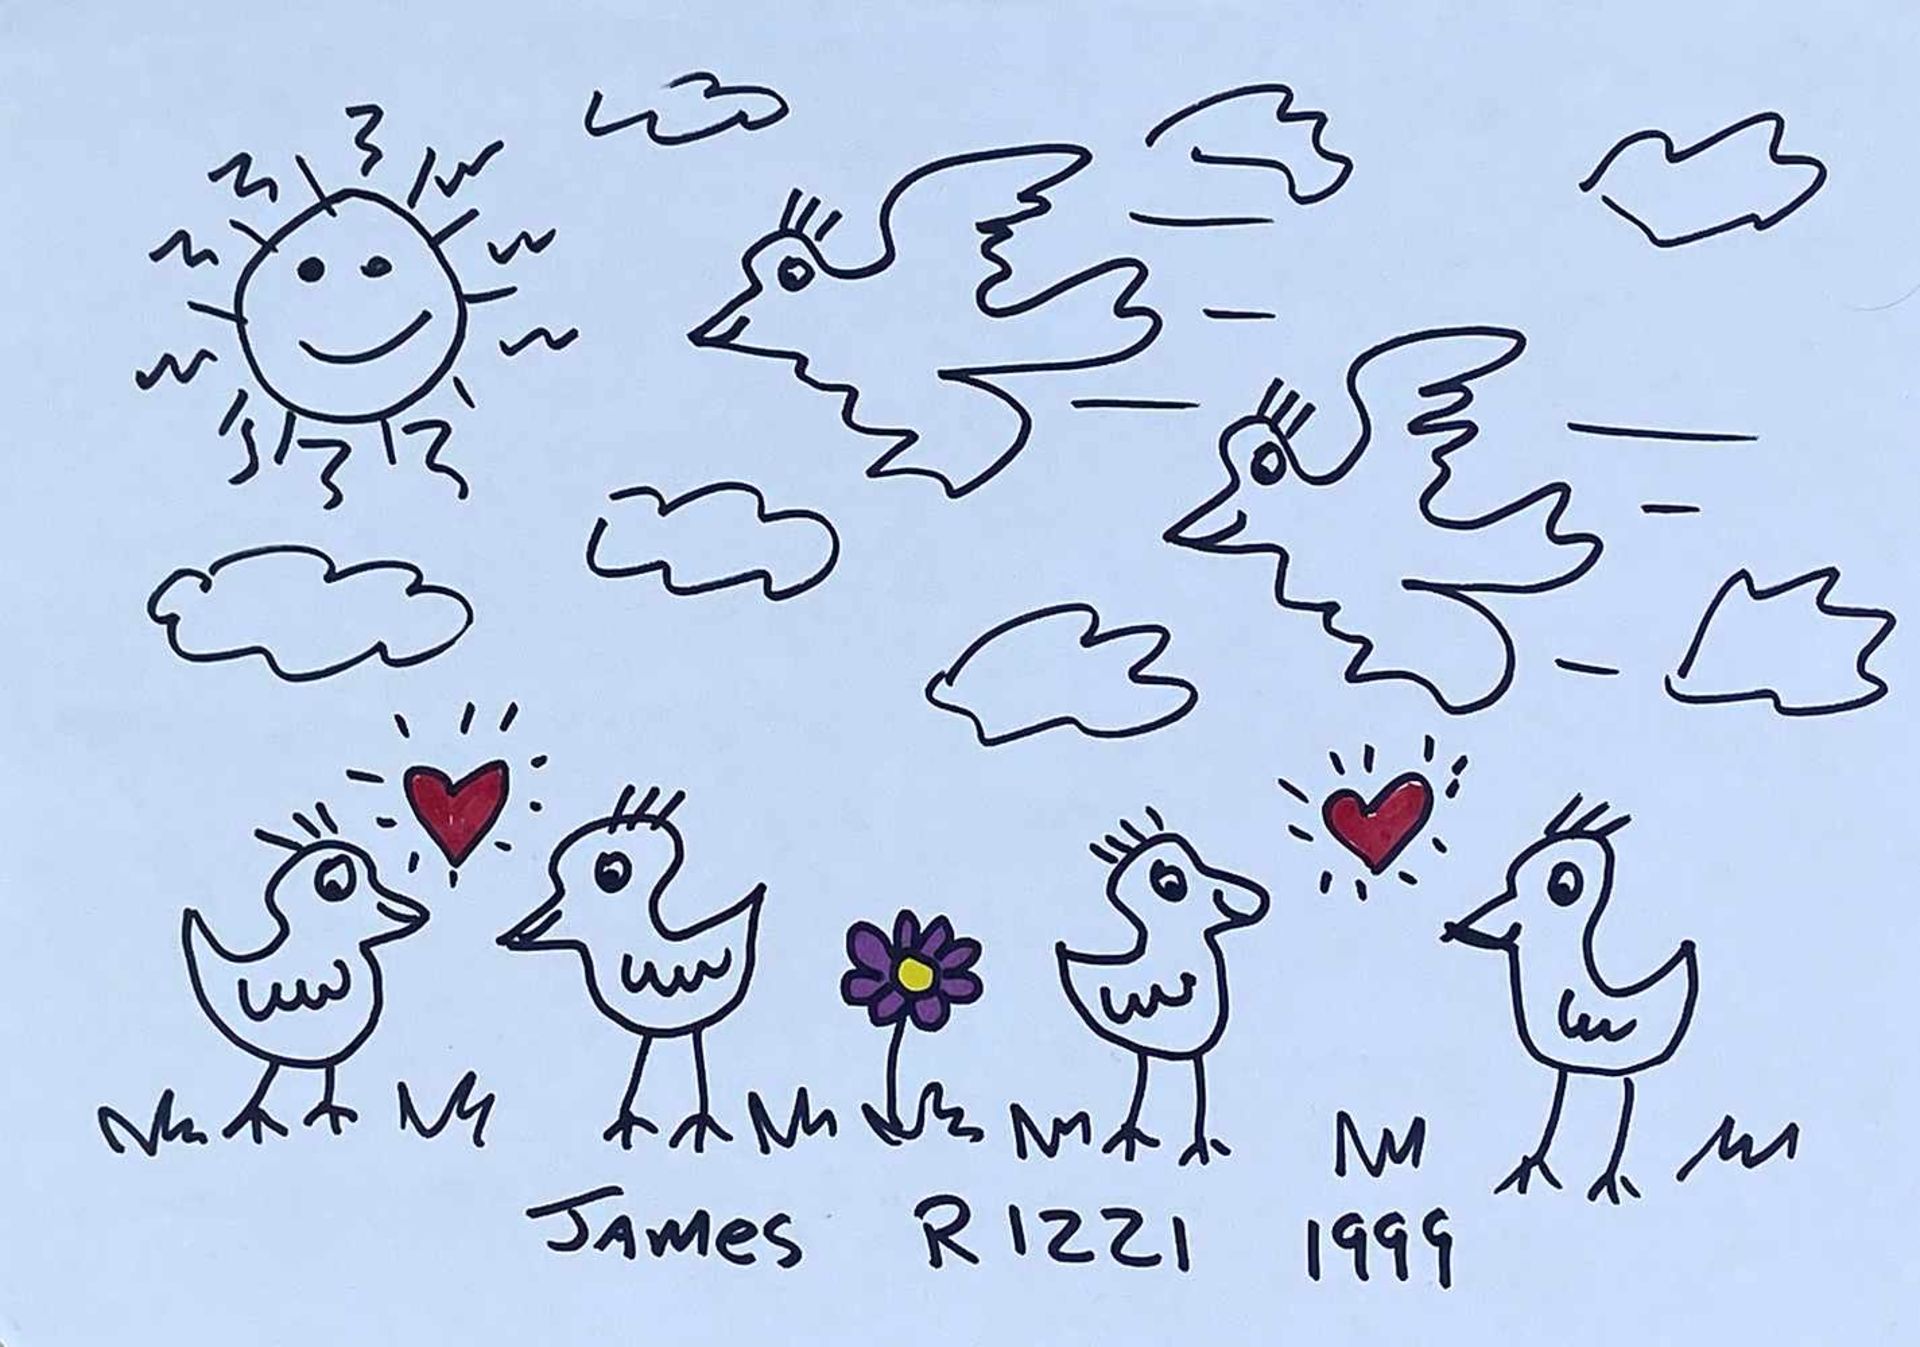 James Rizzi 1950-2011